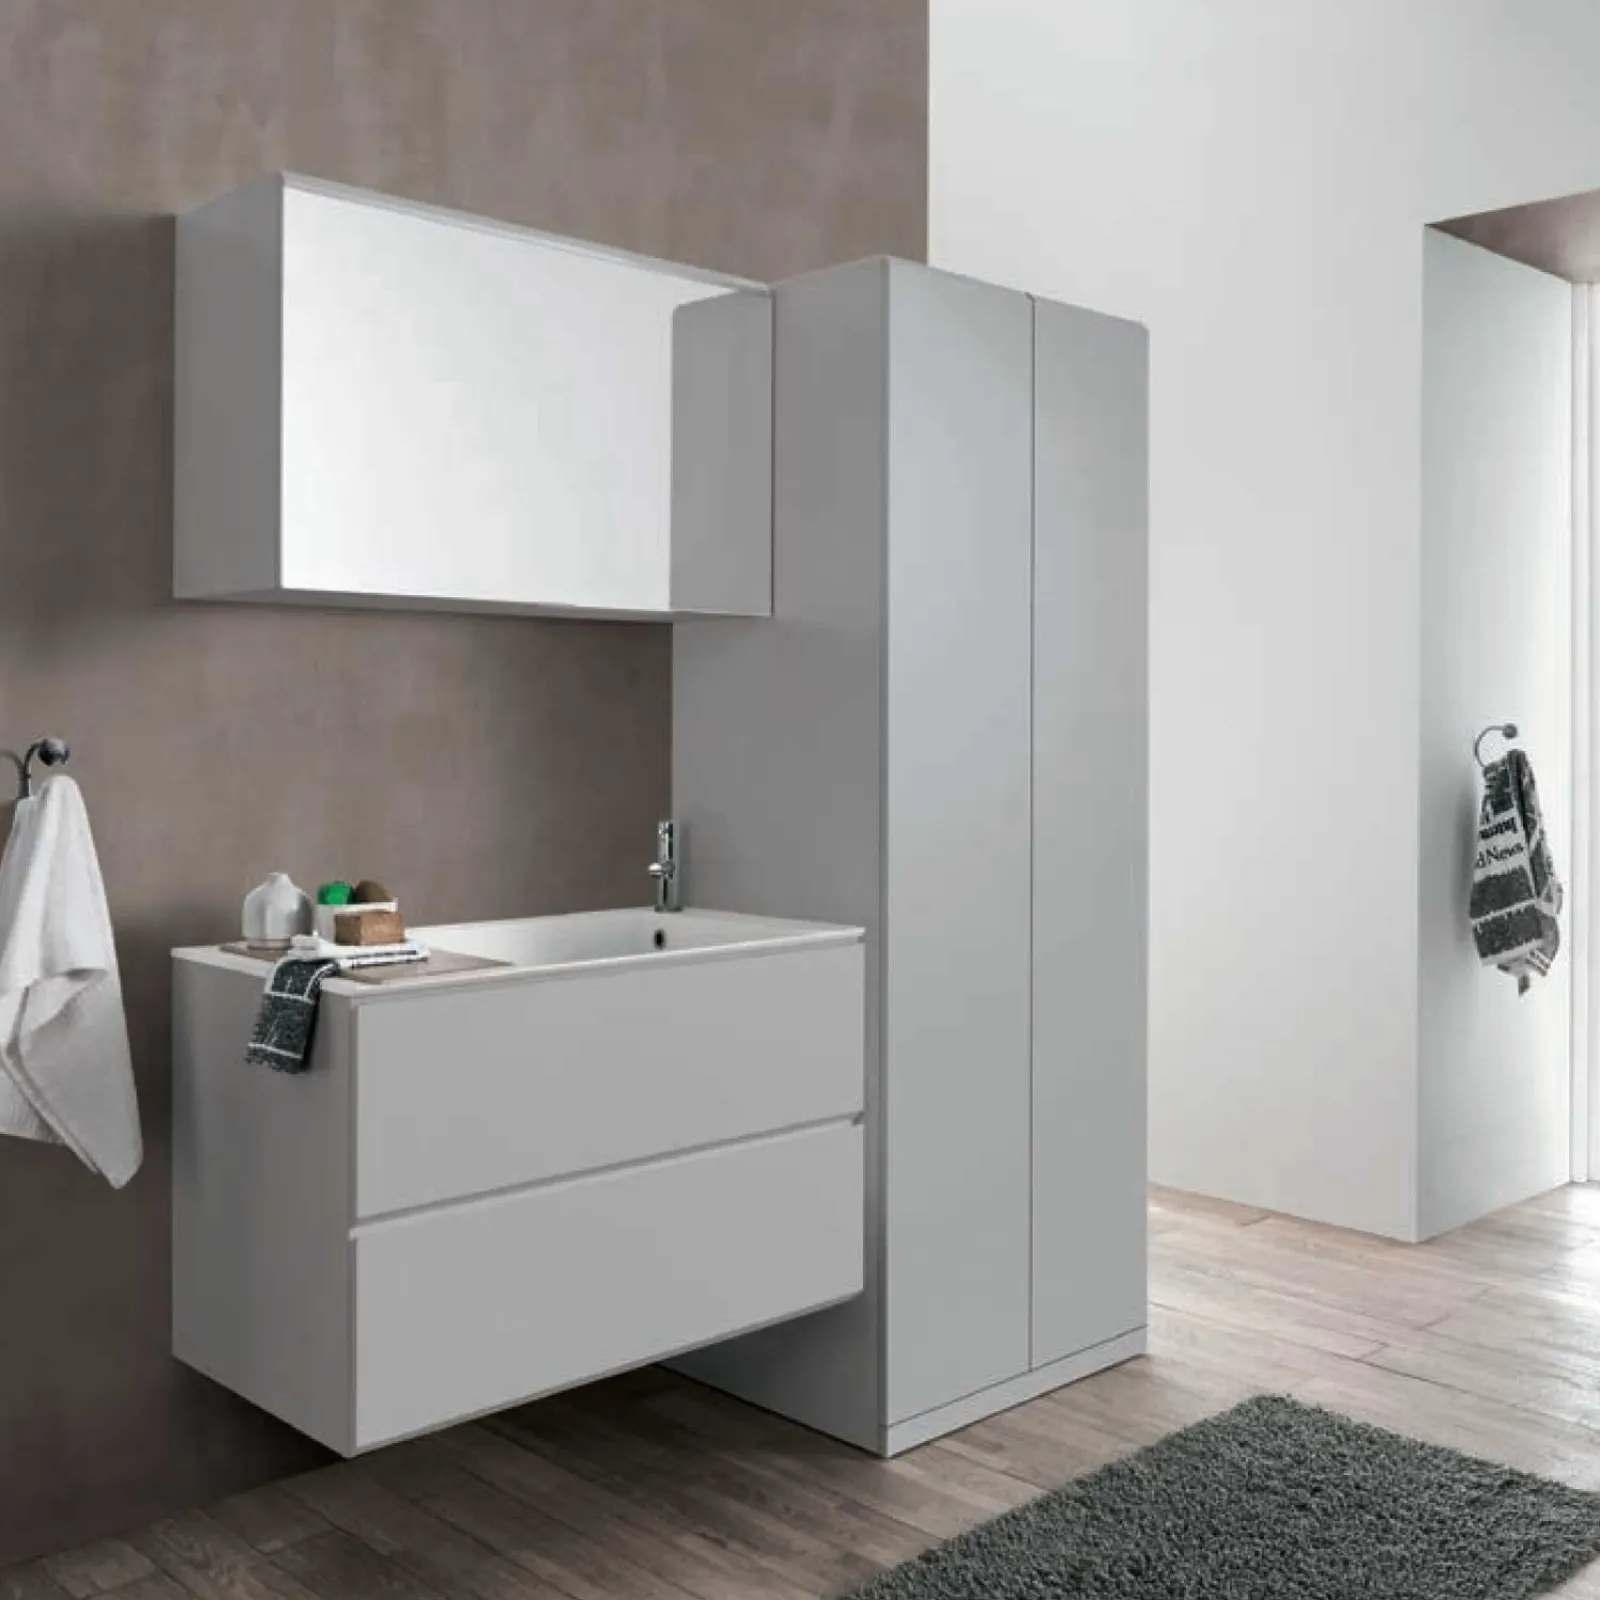 Ikea mobile lavatrice asciugatrice the homey design for Mobile porta lavatrice e asciugatrice leroy merlin